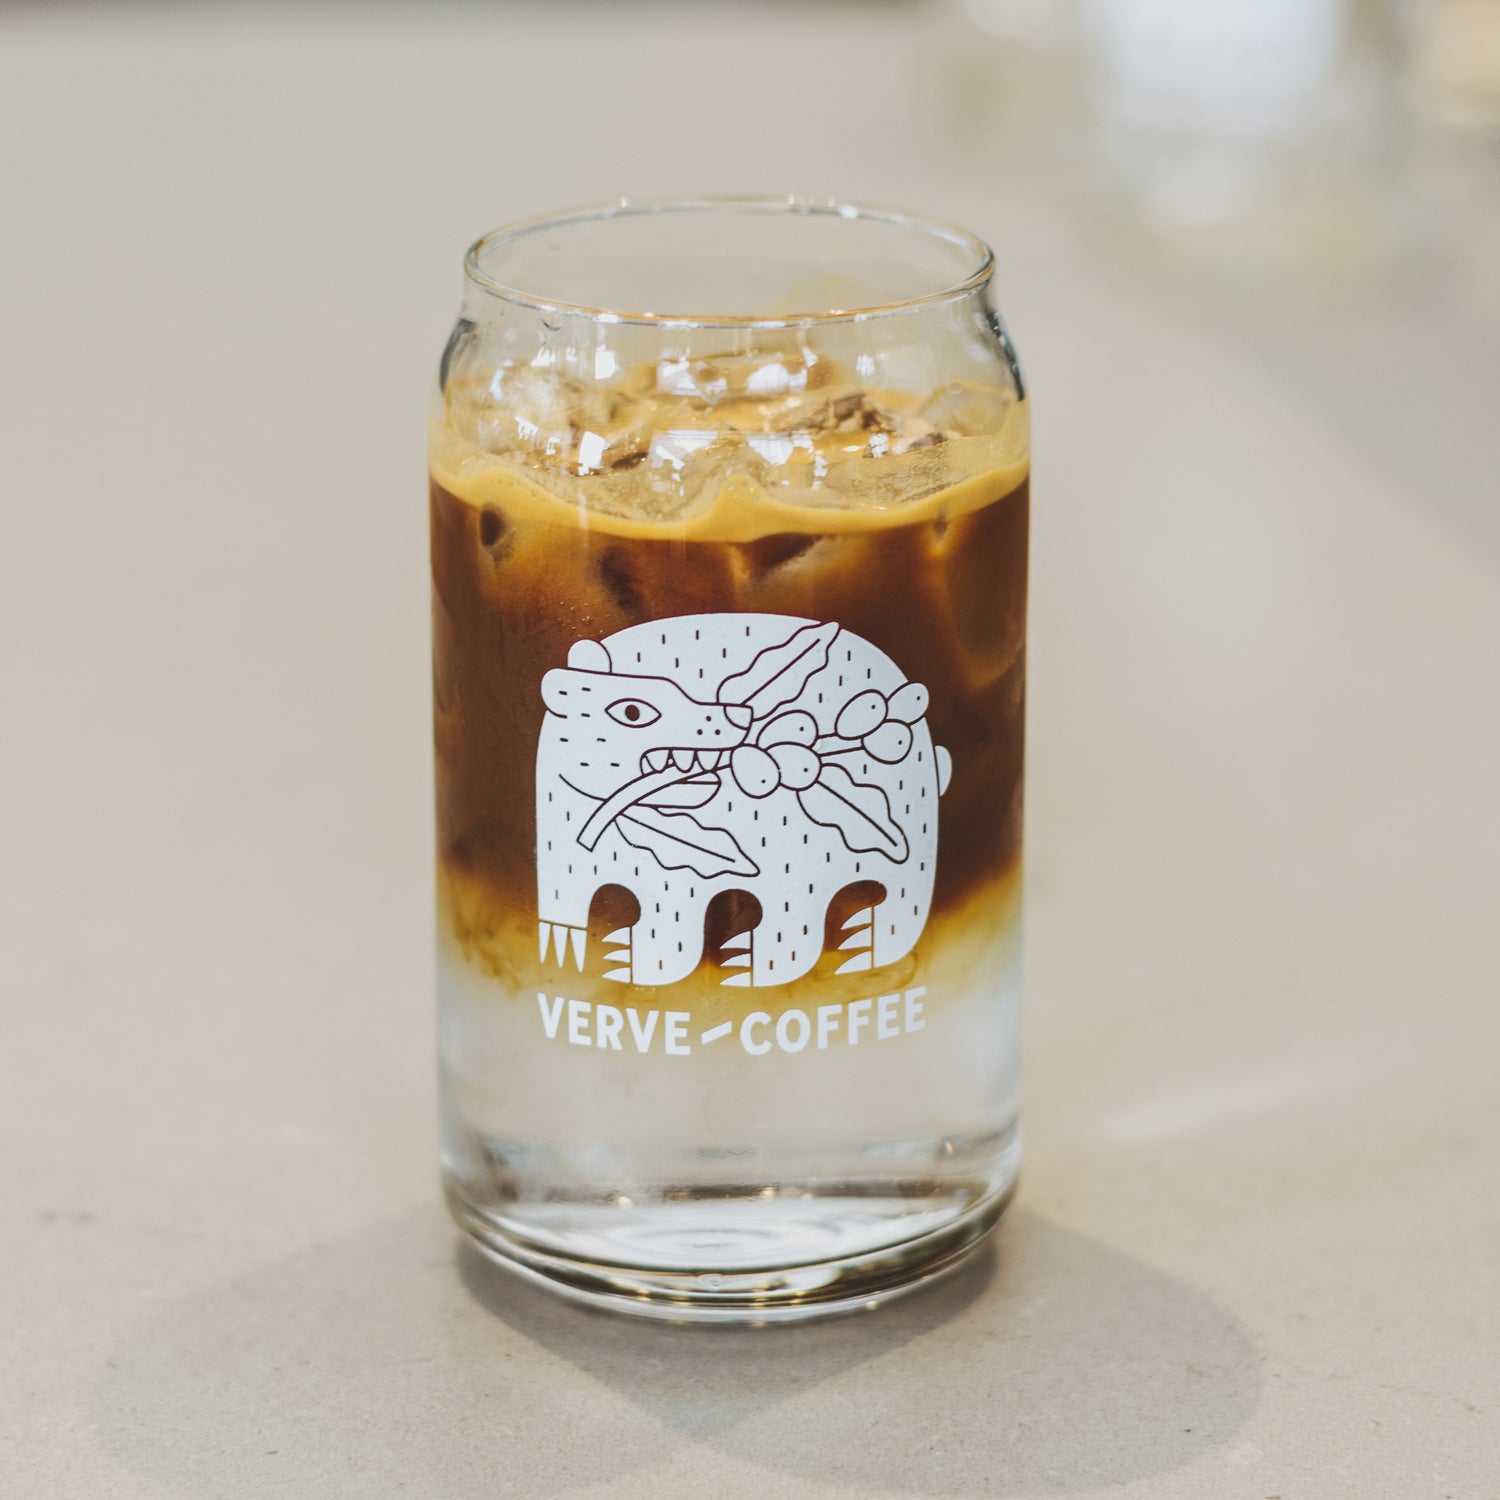 Herald Glass with iced coffee inside